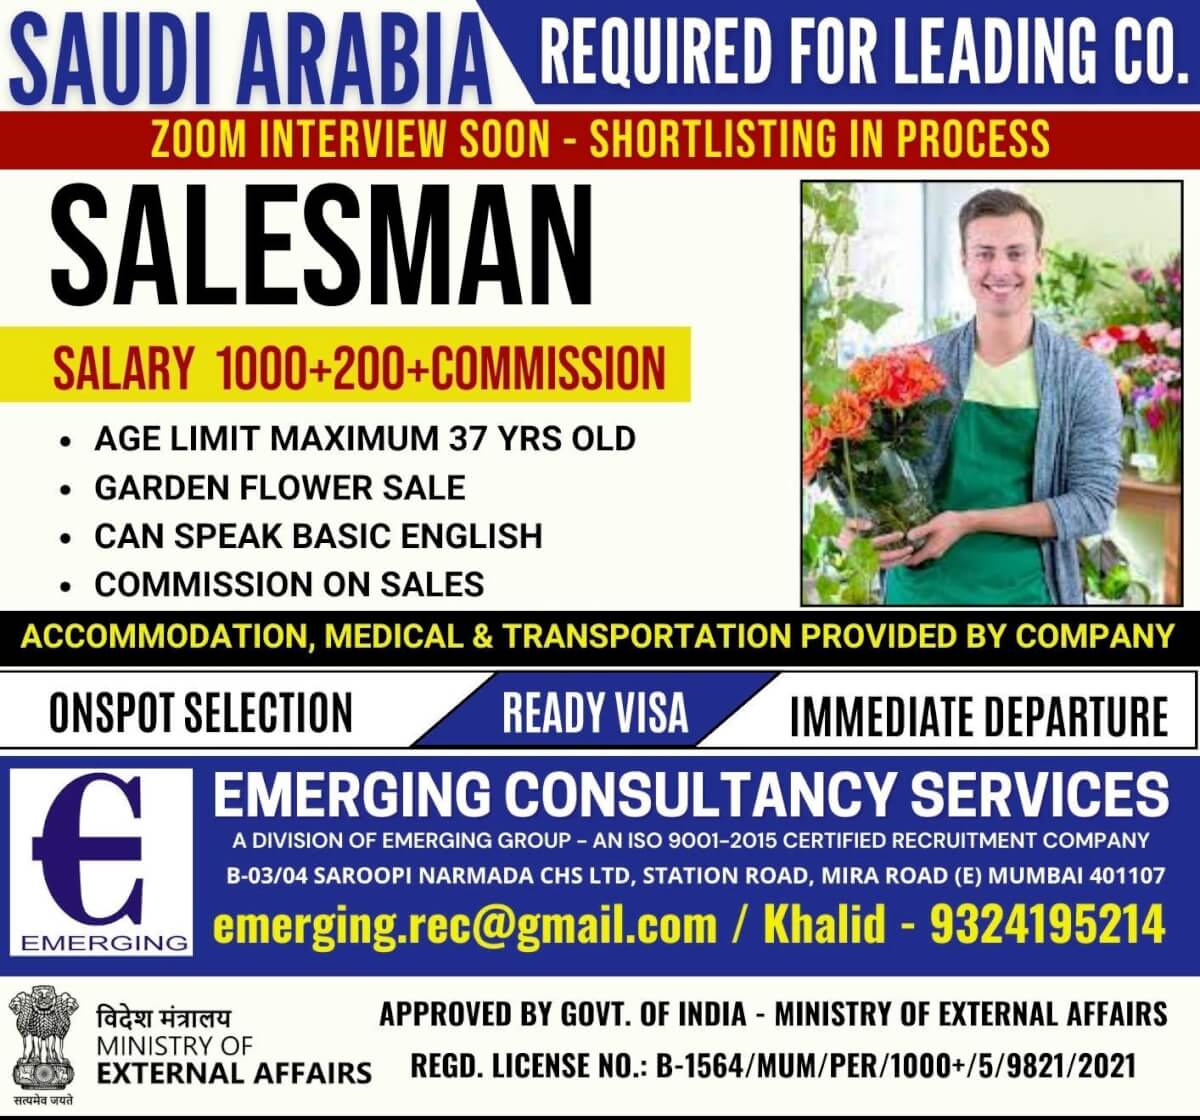 REQUIRED FOR LEADING COMPANY IN SAUDI ARABIA